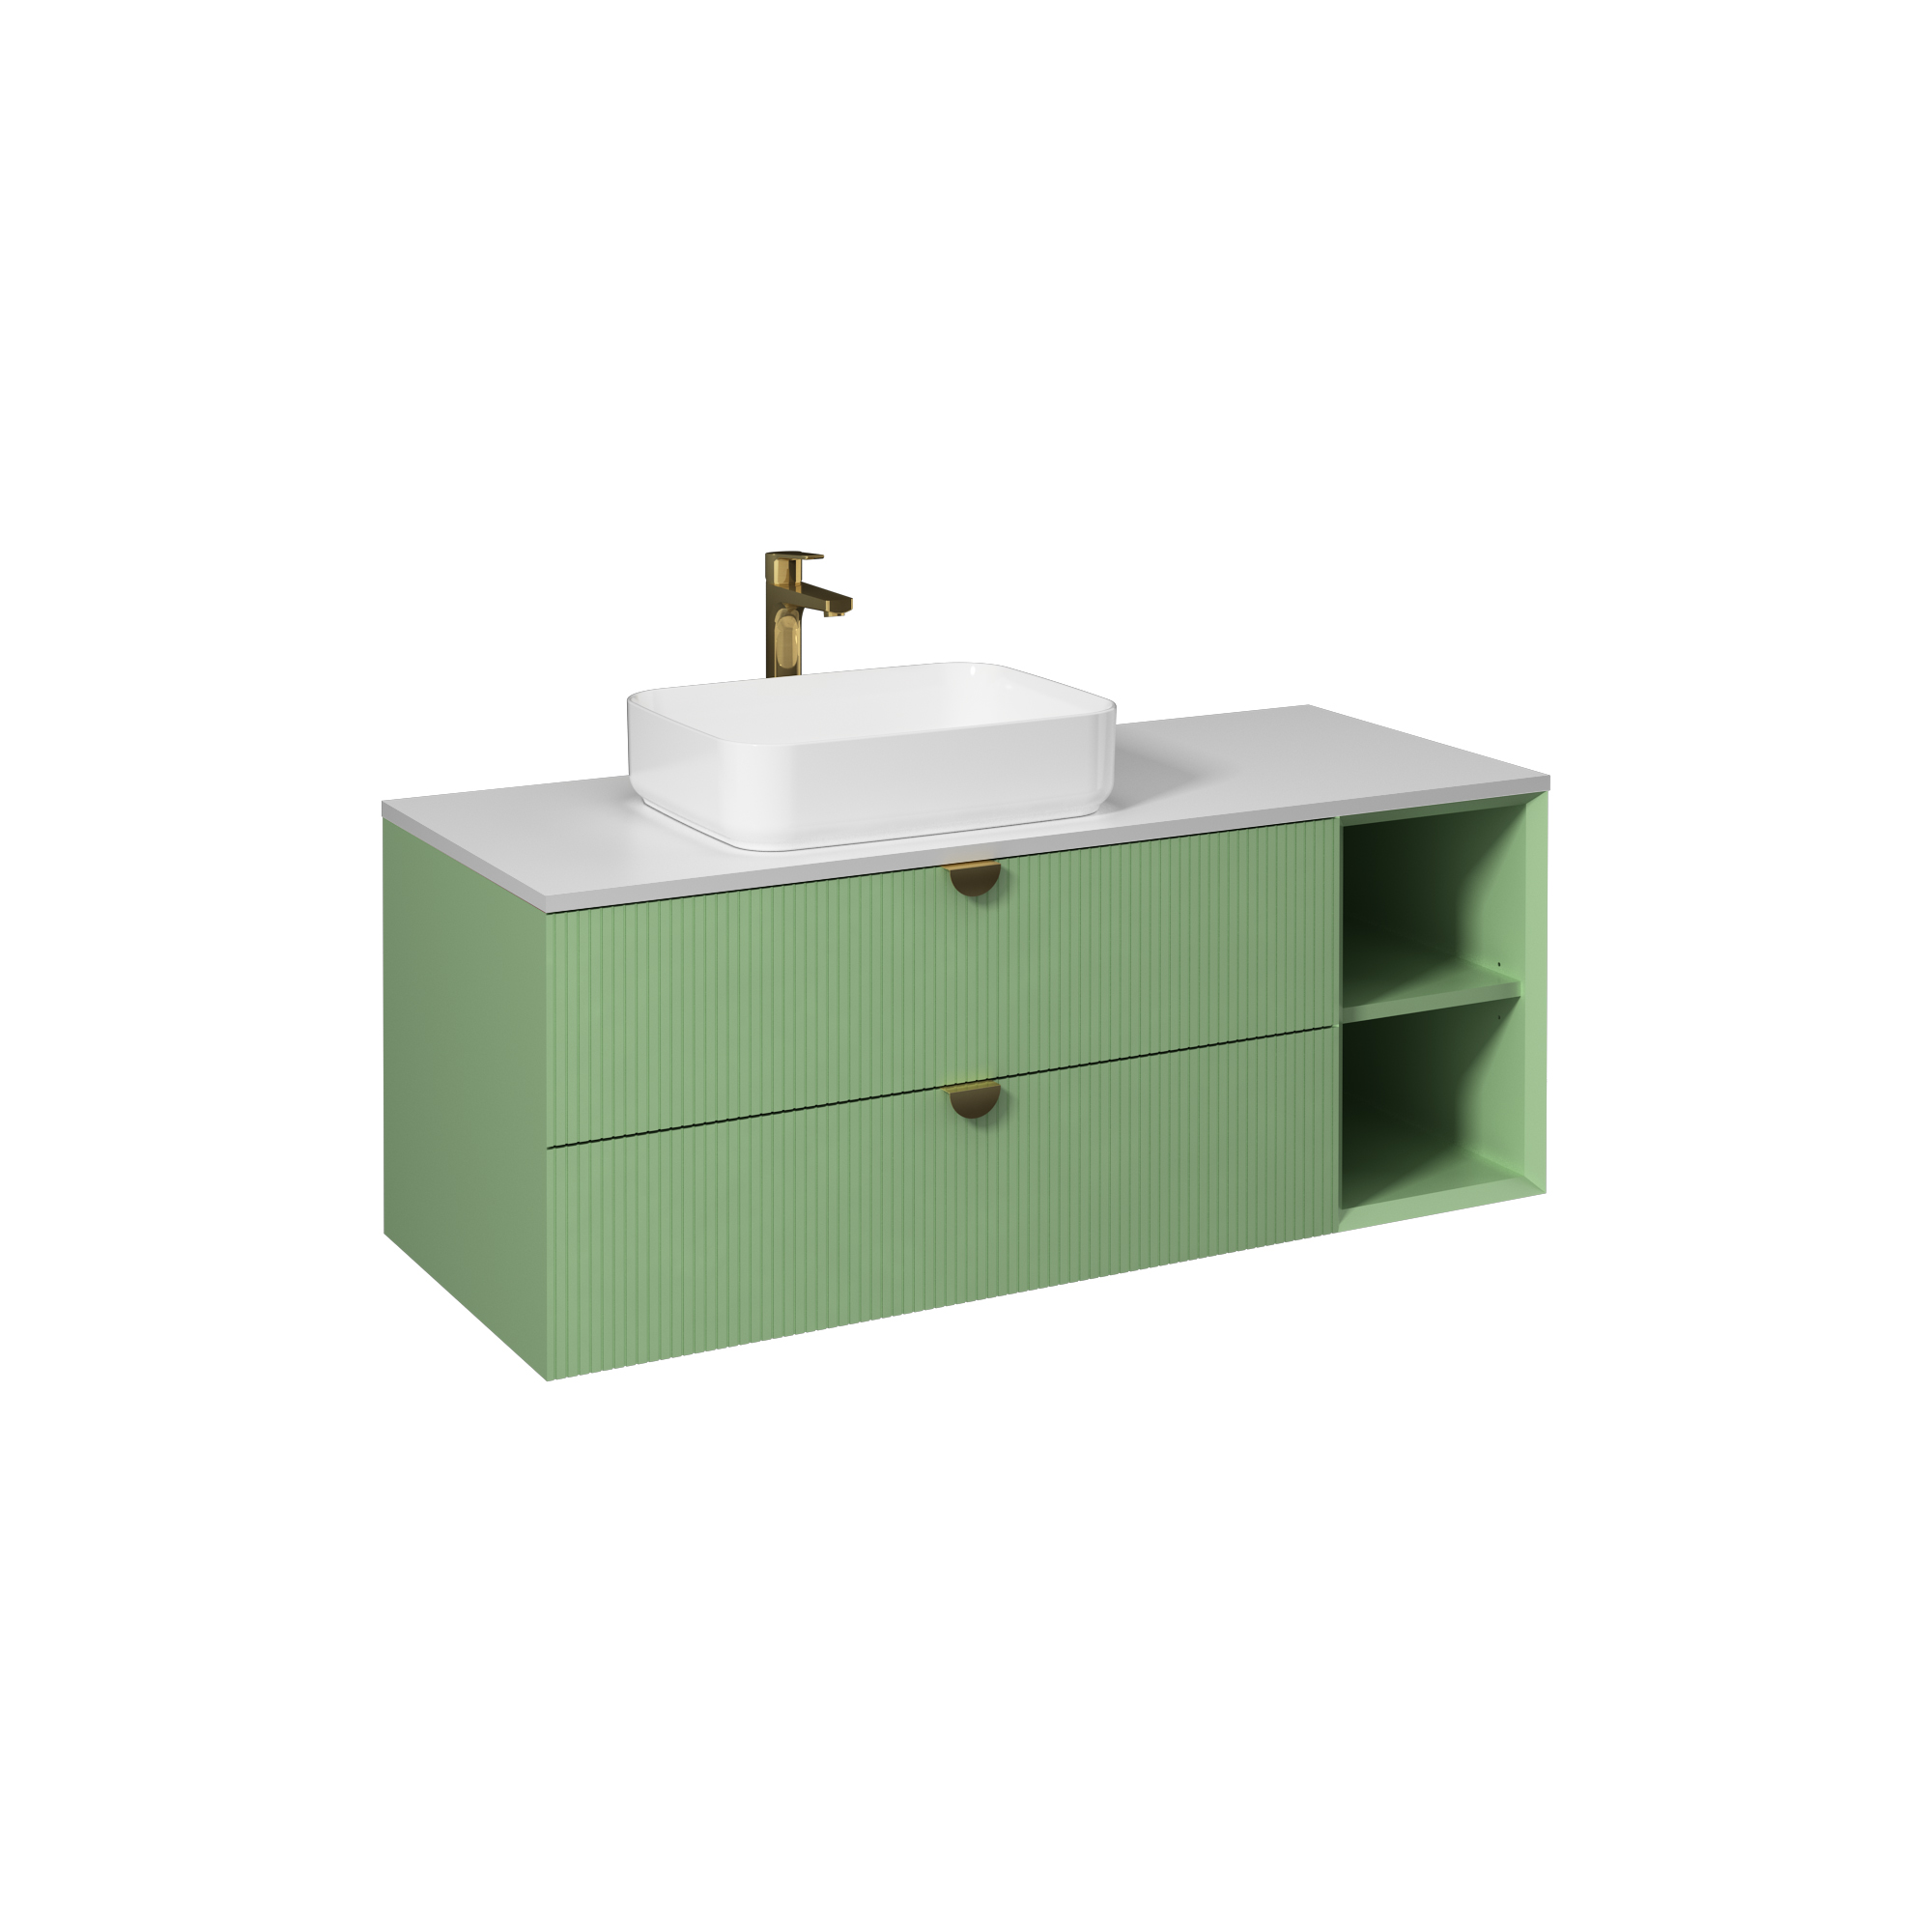 Infinity Washbasin Cabinet Ocean,  with Petrol Green Washbasi 51"